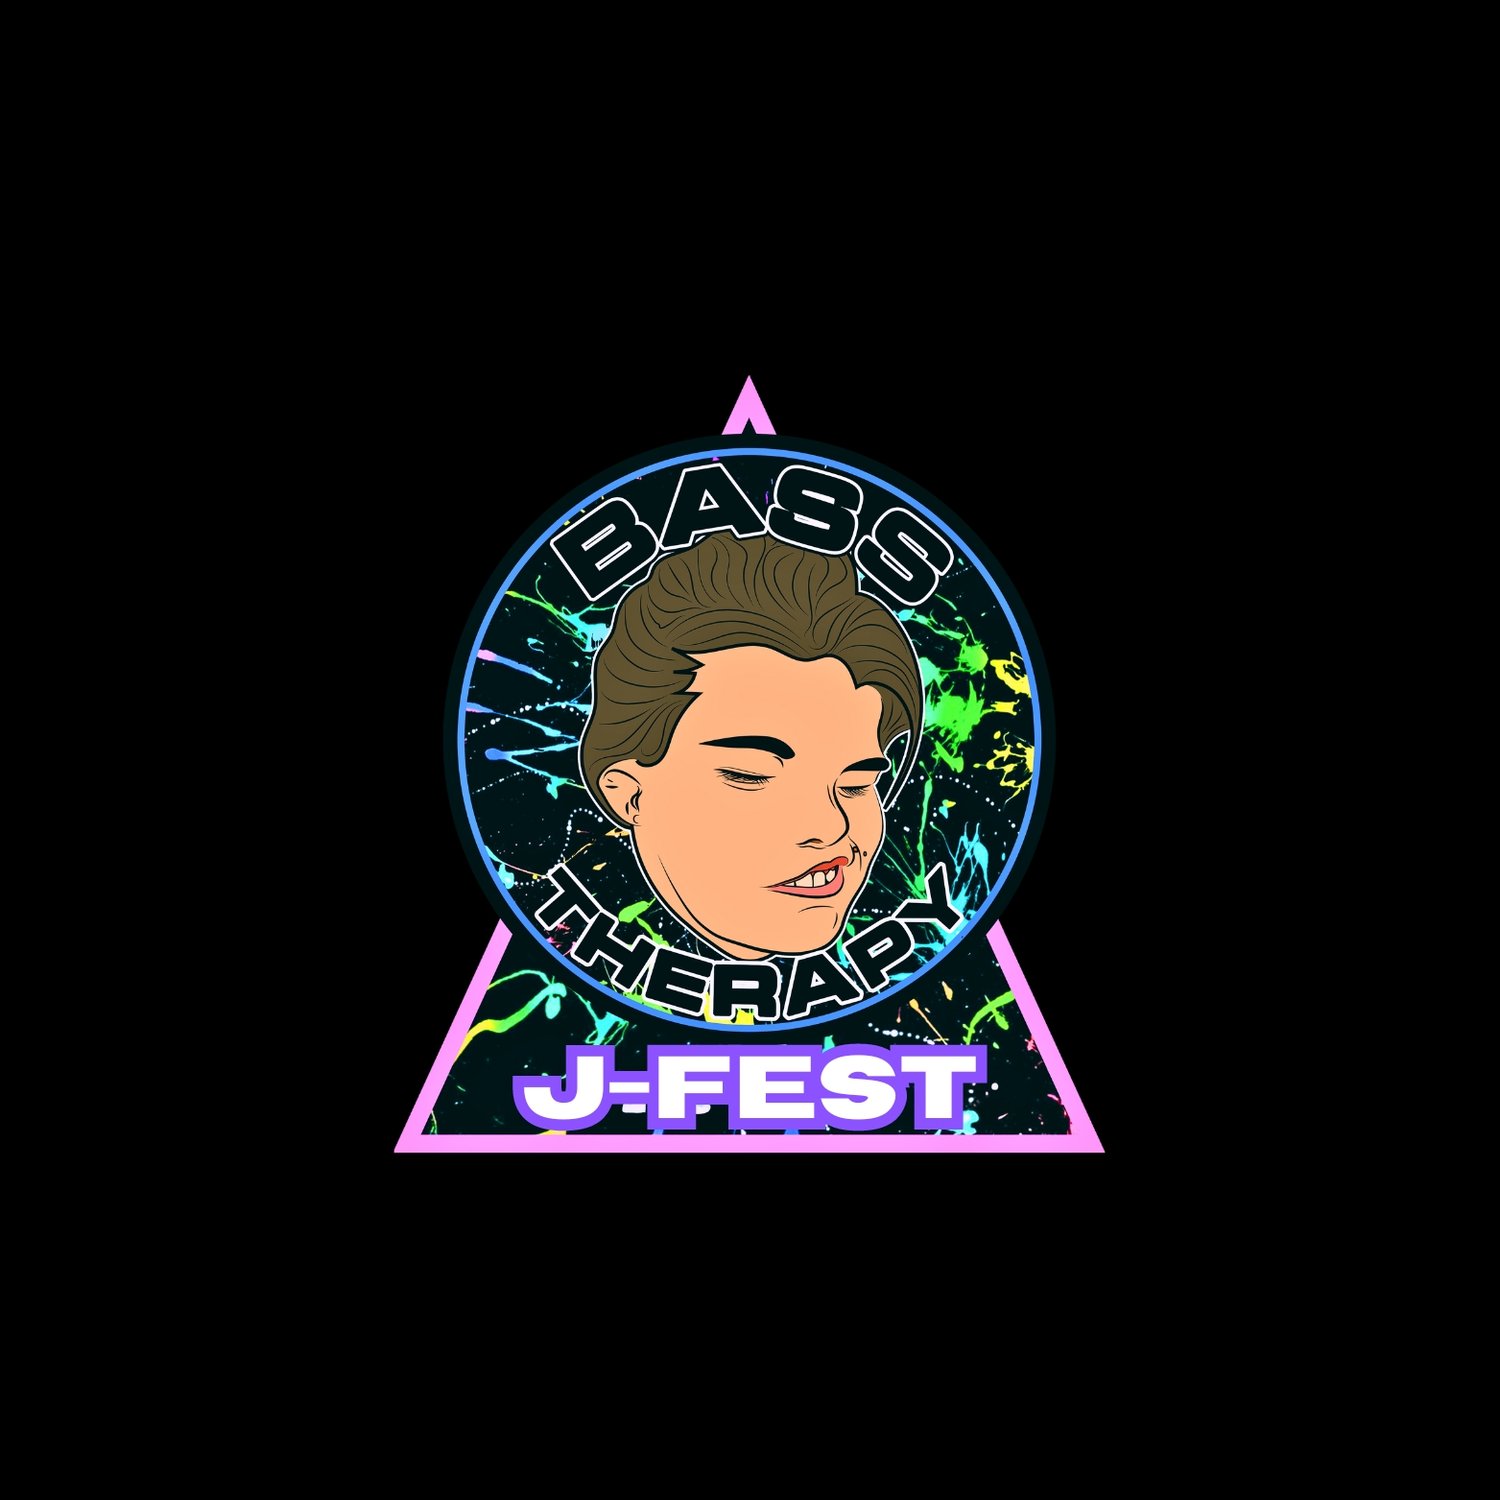 J-Fest